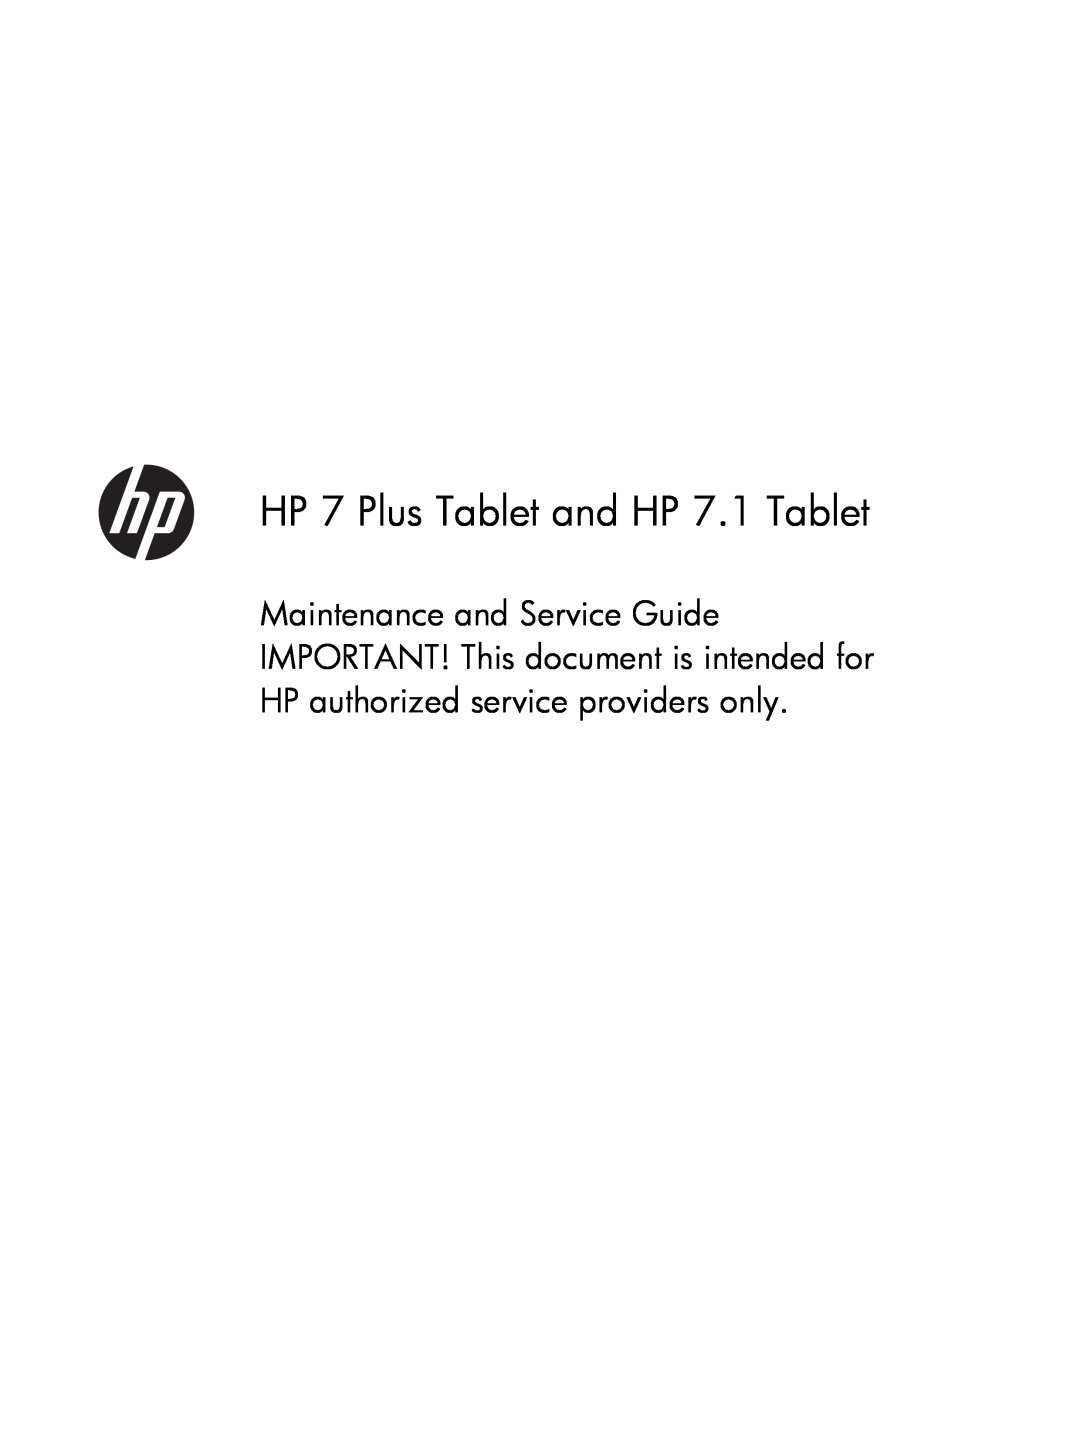 HP 7 Plus 1301, 7 Plus 1302us manual HP 7 Plus Tablet and HP 7.1 Tablet 